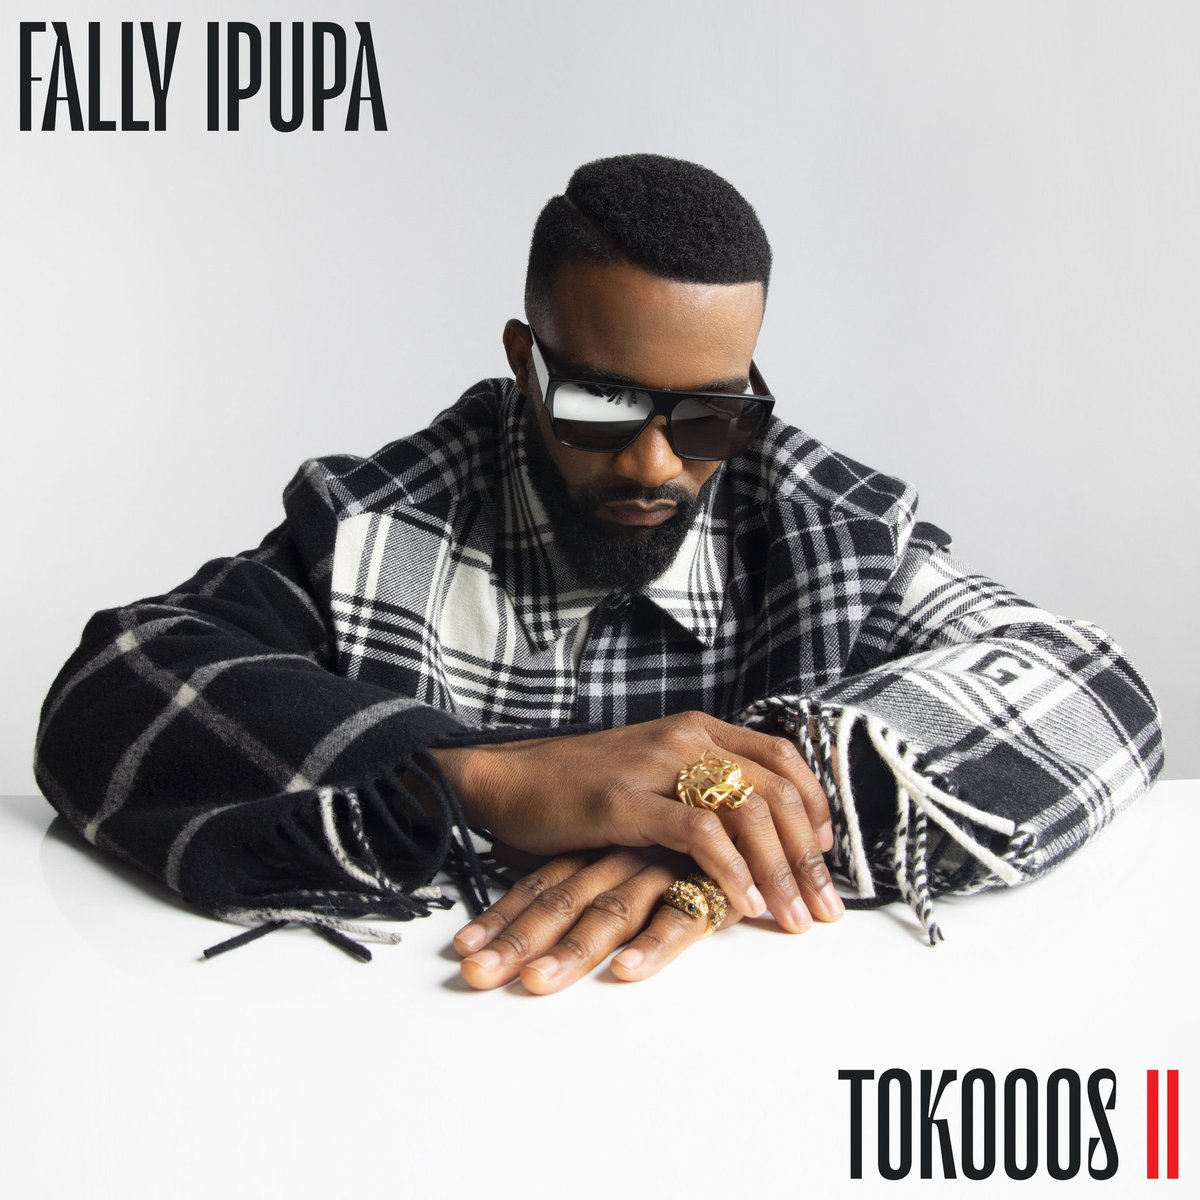 FALLY IPUPA Tokooos II Album Cover